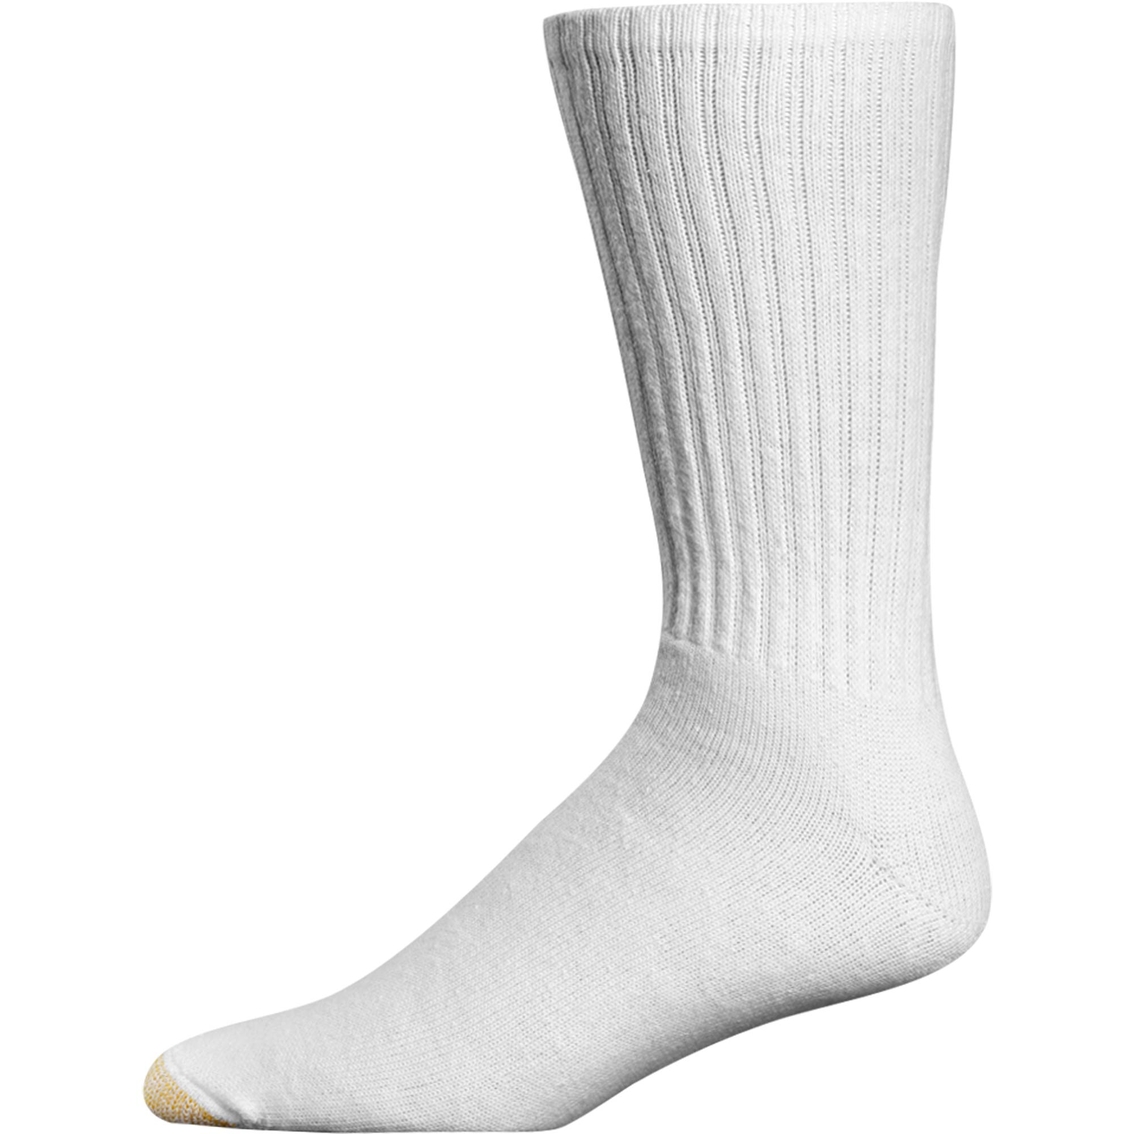 Gold Toe Men's Cotton Crew Socks 6 Pk. | Socks | Clothing & Accessories ...